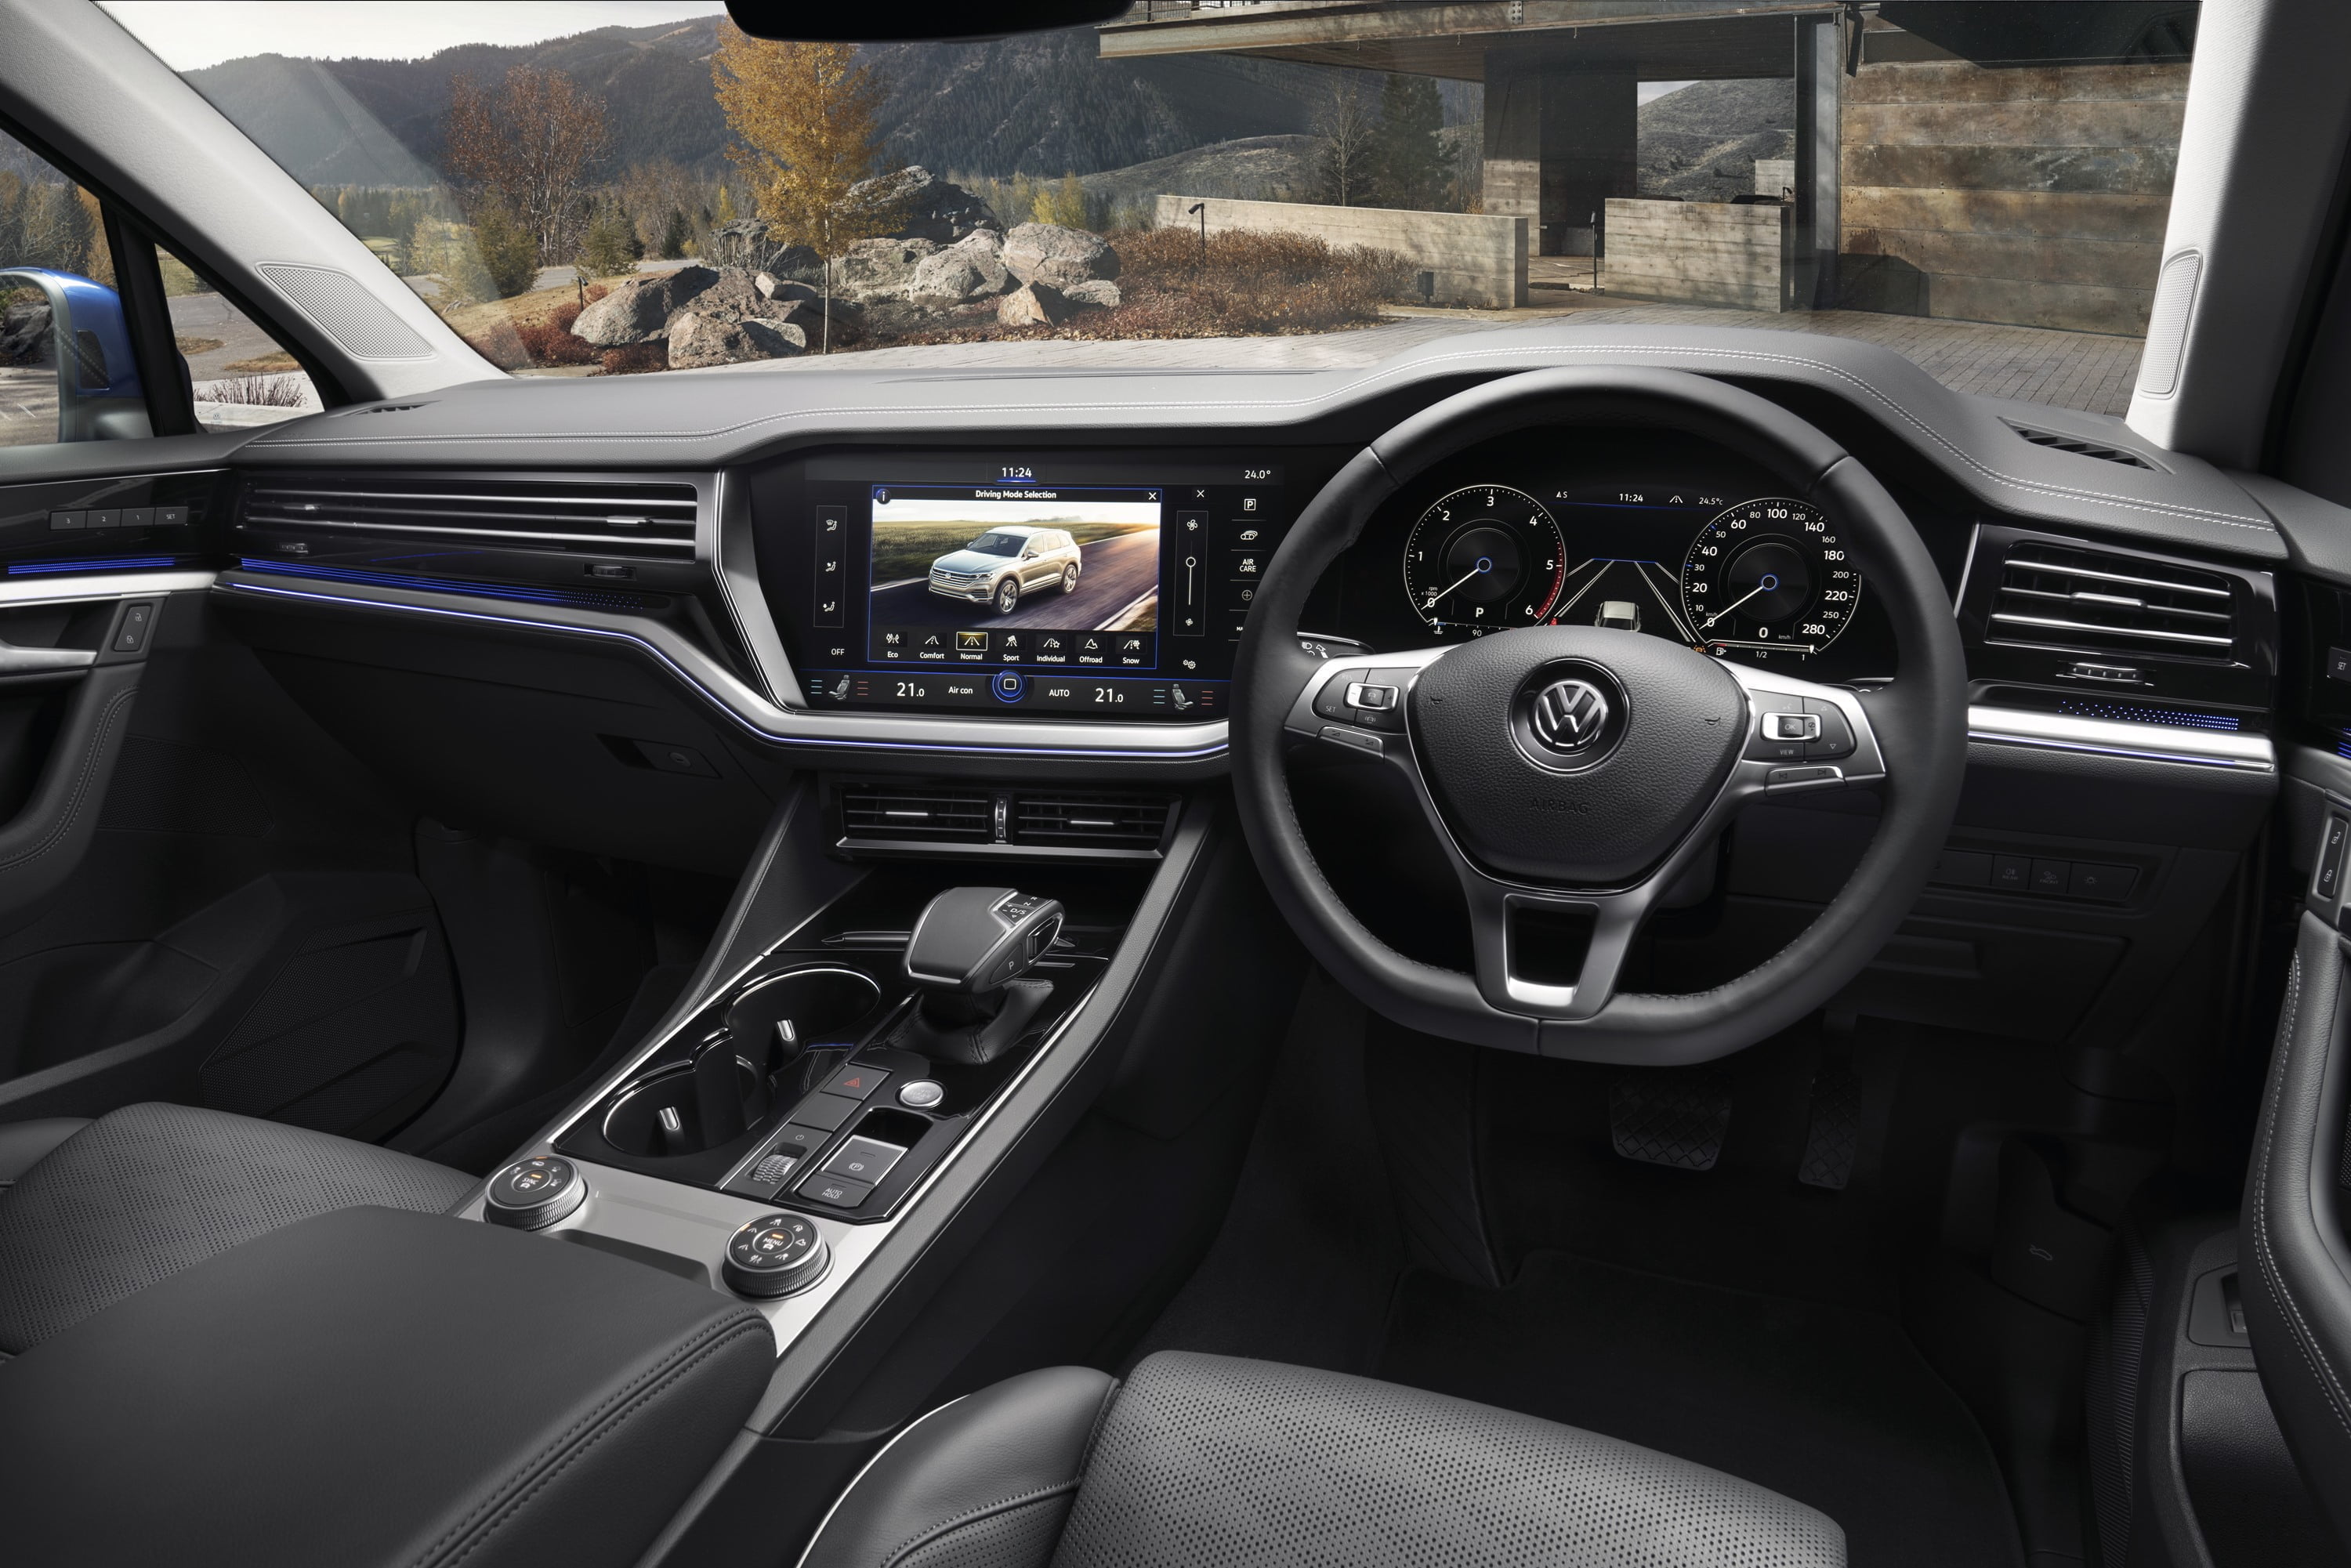 2019 VW Touareg Launch Edition 3 interior 1